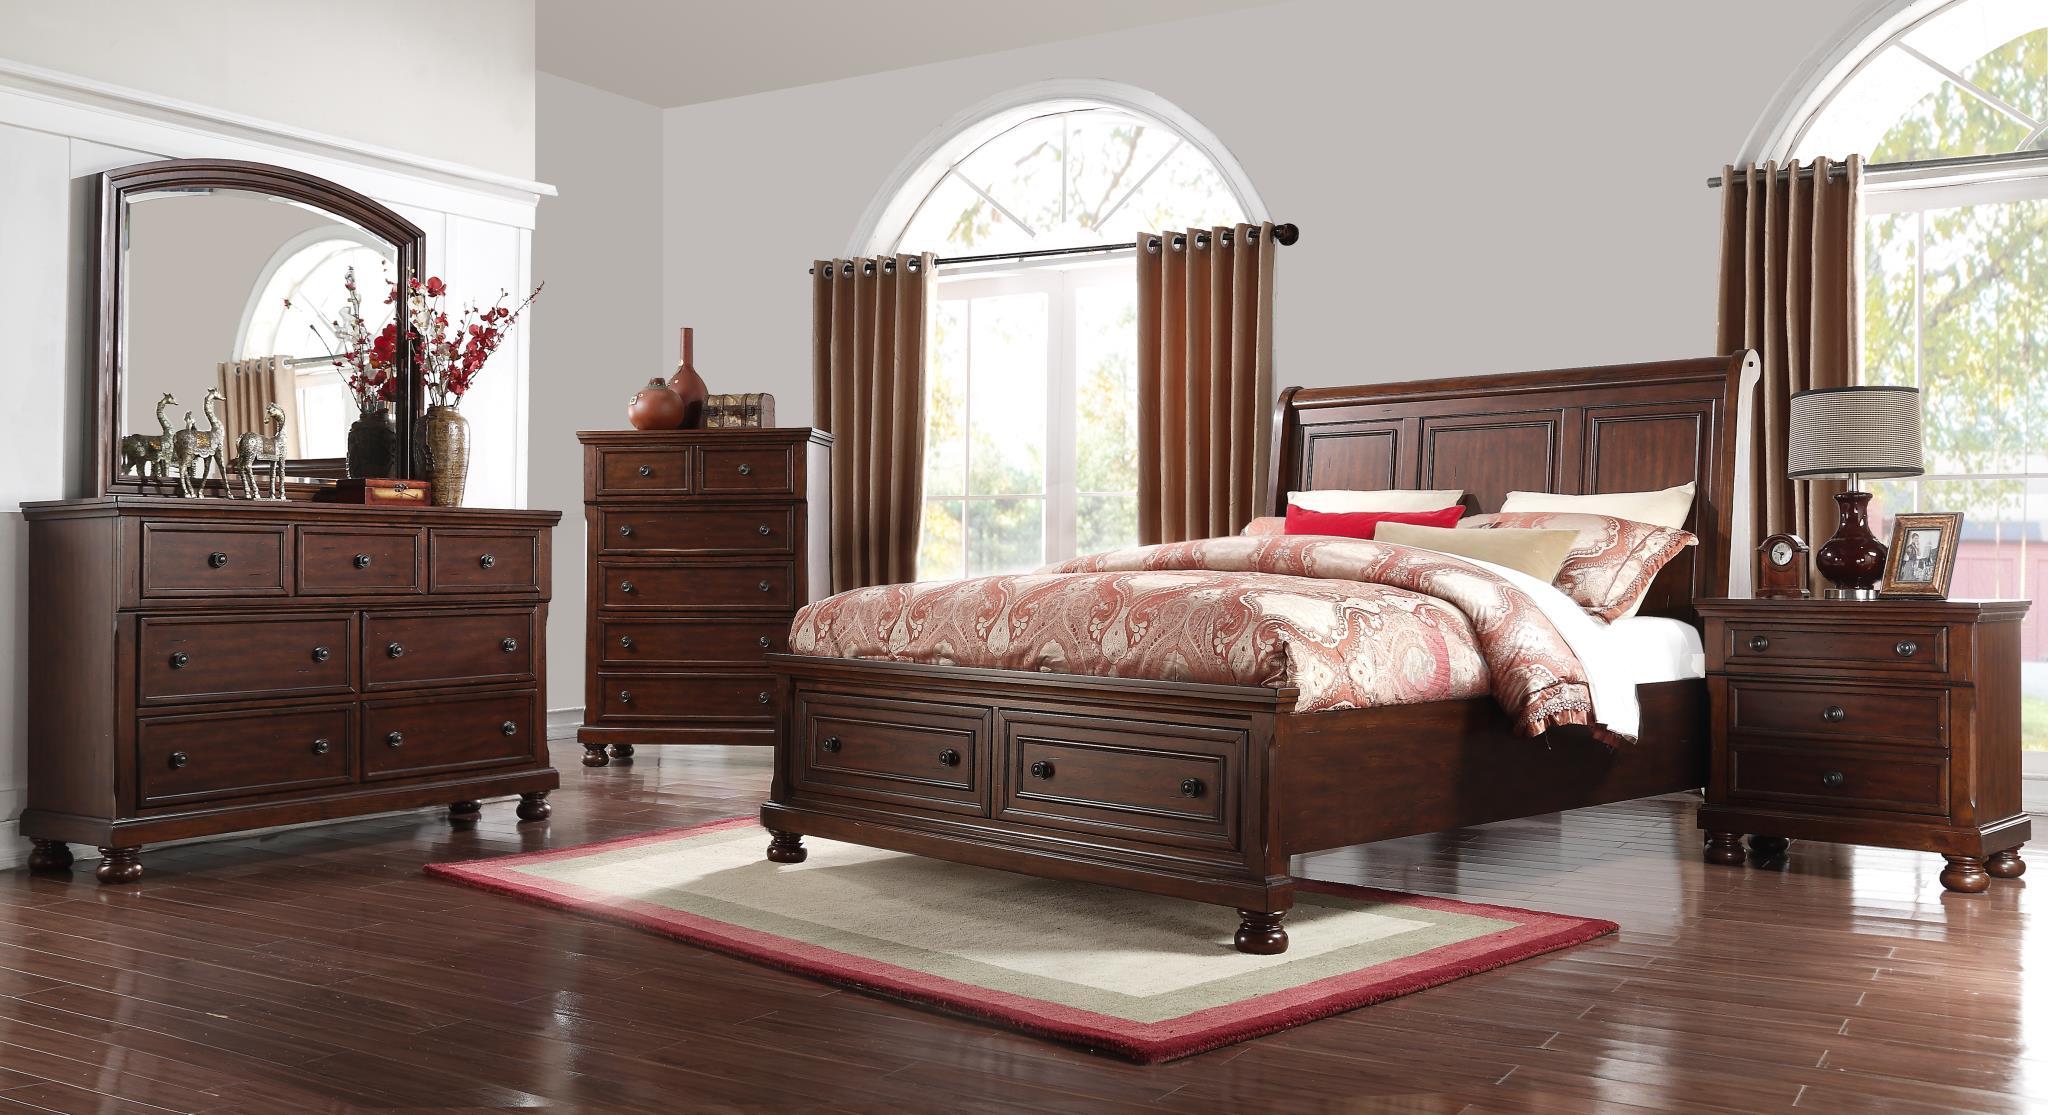 Traditional, Transitional Storage Bedroom Set Prescott 1040-6pcs in Brown 